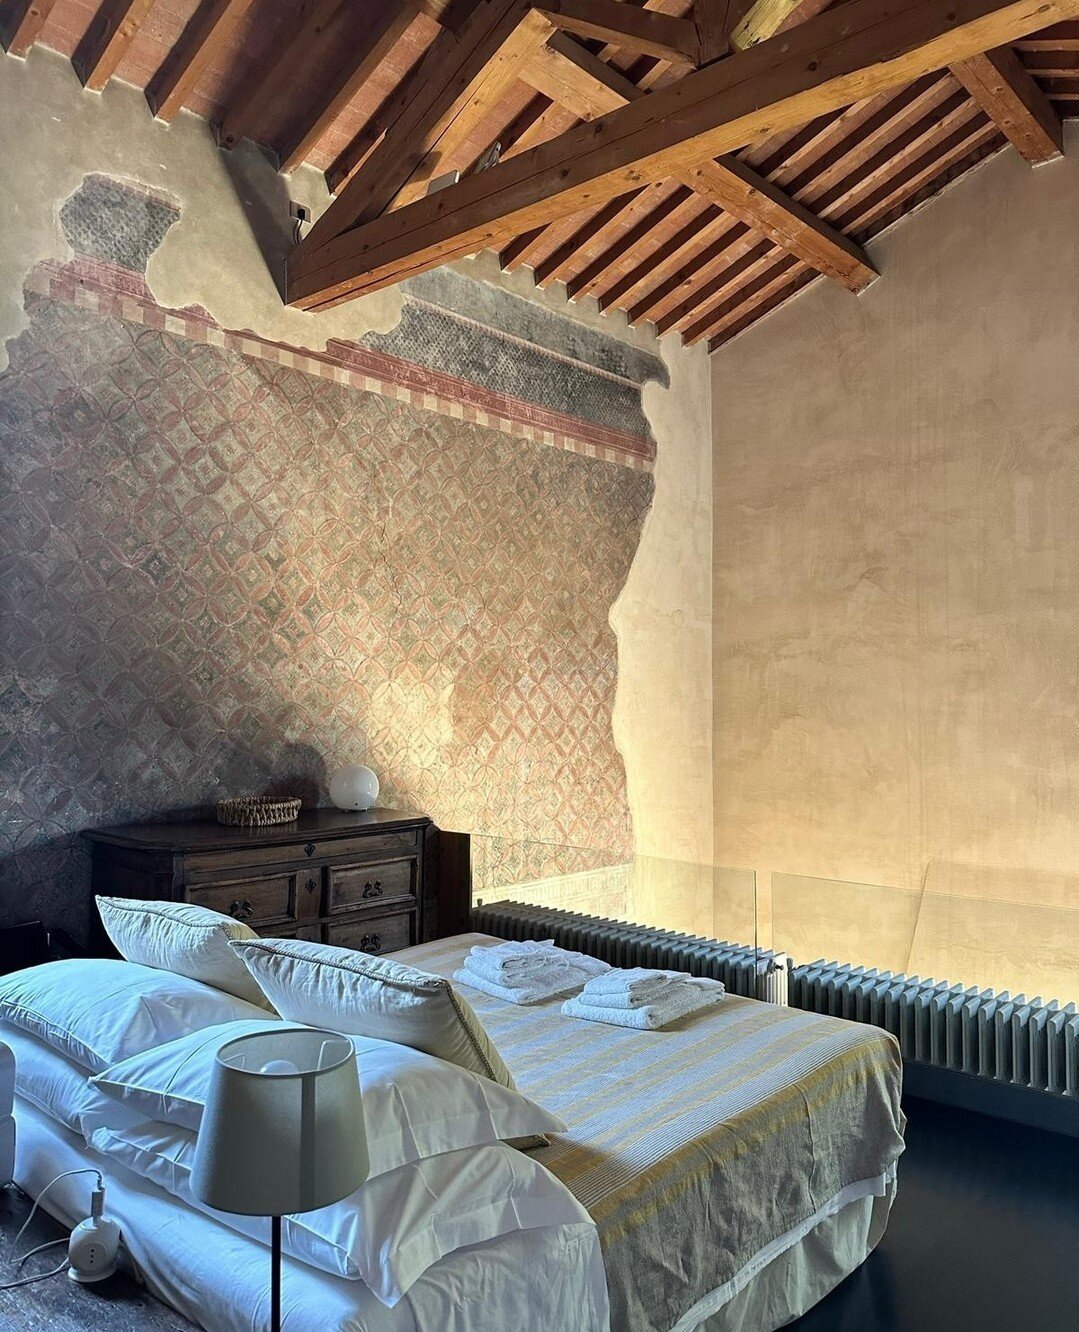 The Peruzzi Bedroom.⁠
⁠
⁠
#brunosacchi⁠
#brunosacchiarchitect⁠
#torredisopra